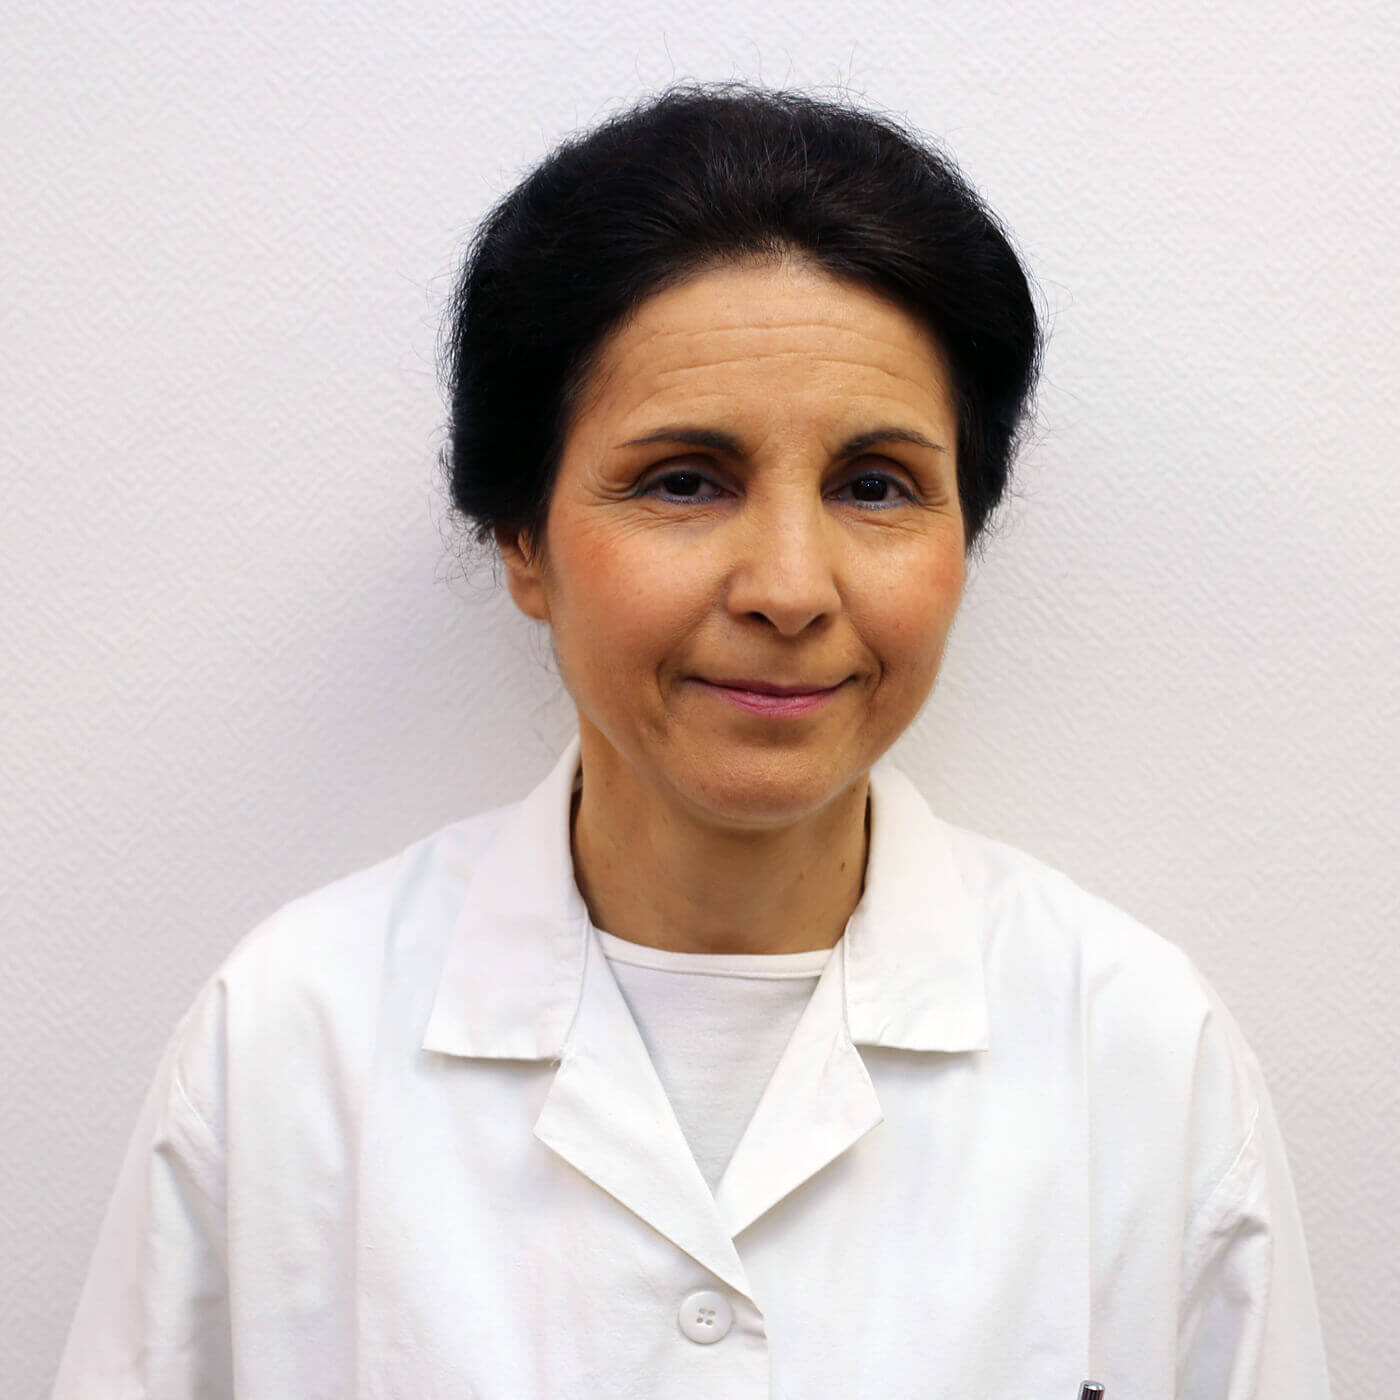 Docteur Fabienne Leroy-Testas – Ophtalmologiste Val d’Oise